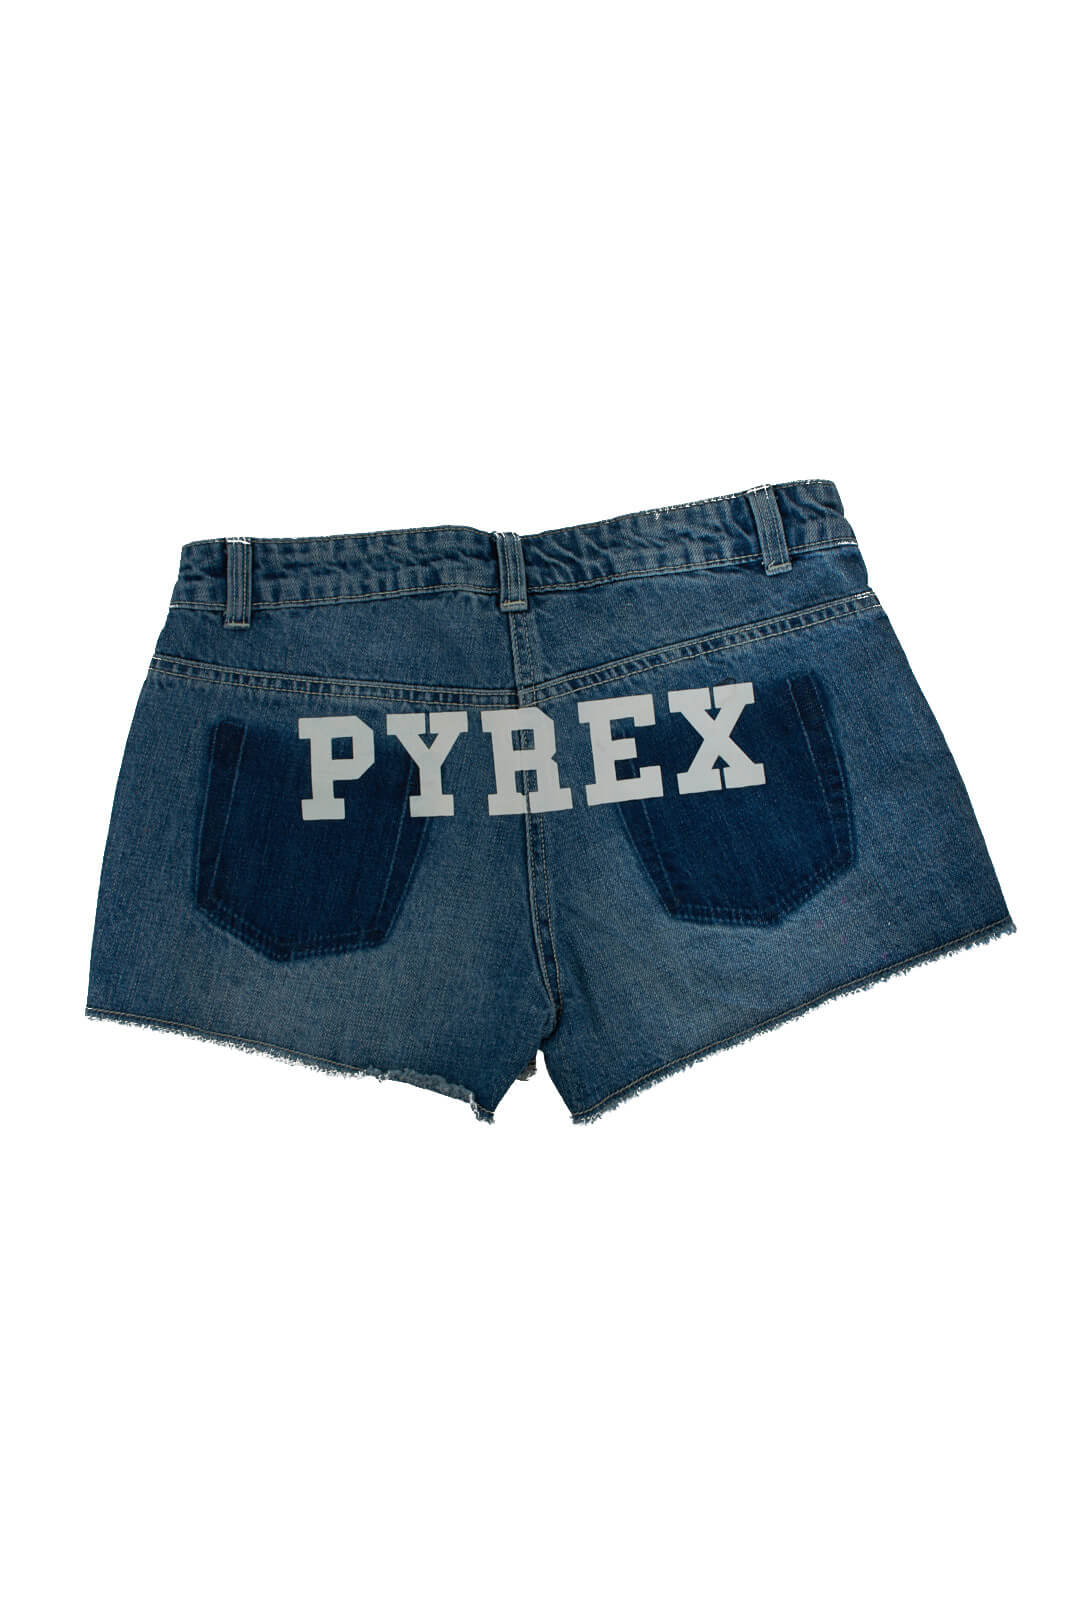 Pyrex short girl in jeans